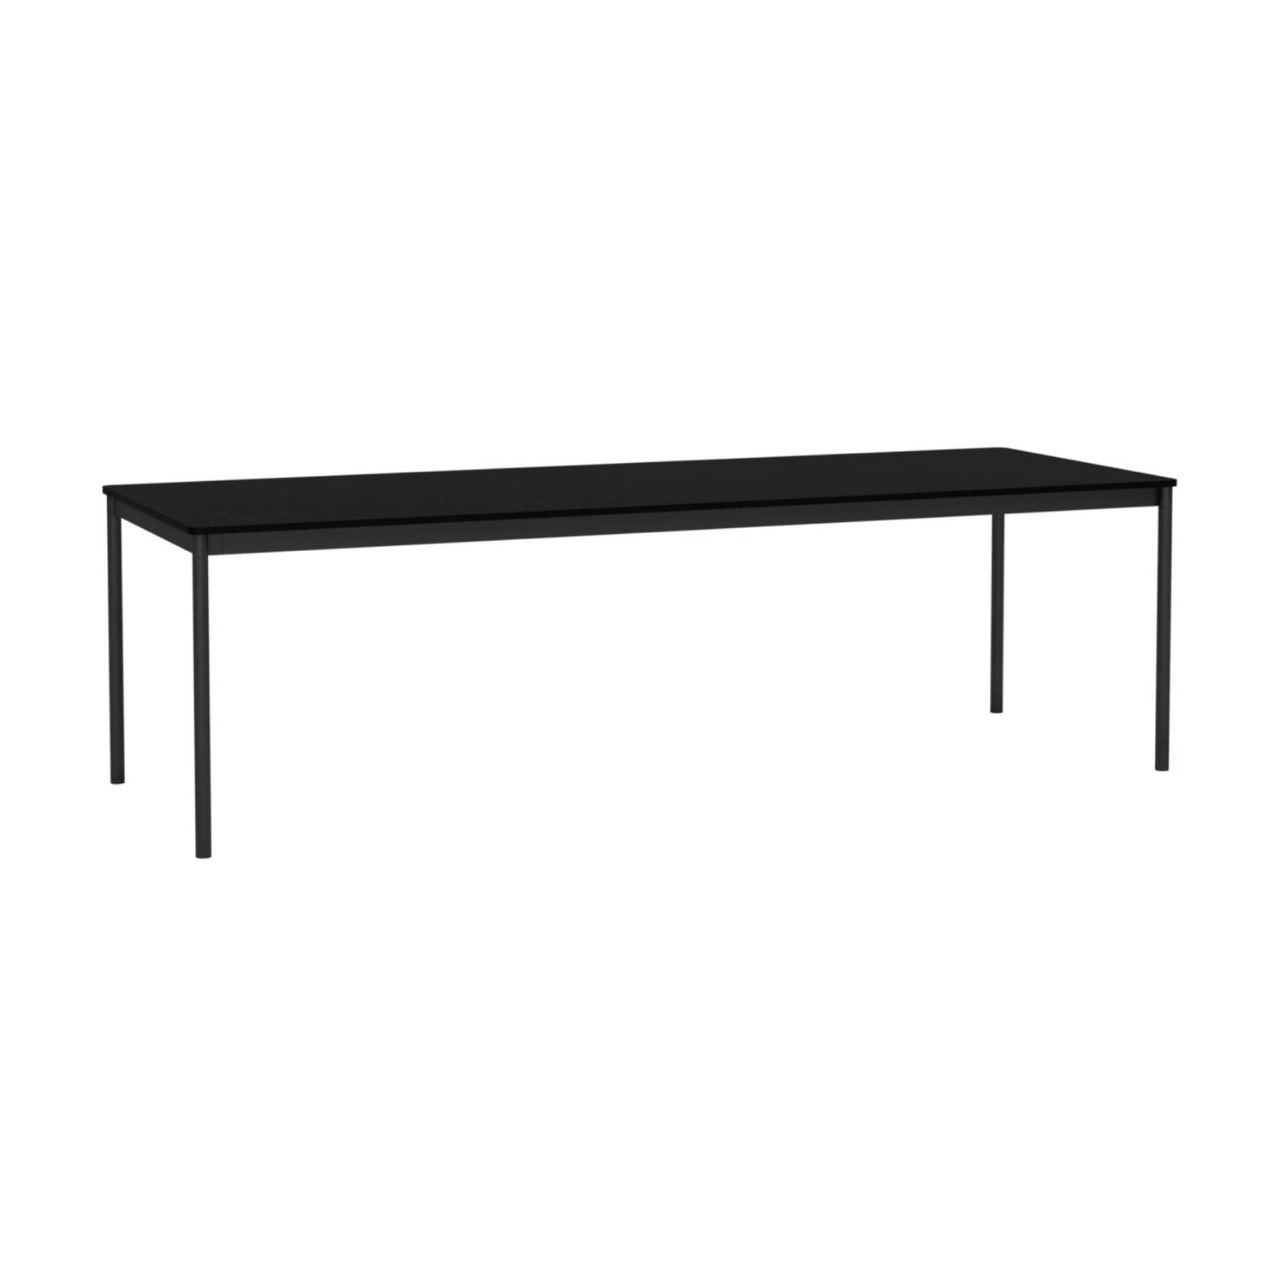 Base Table: Large + Black Laminate + ABS Edge + Black